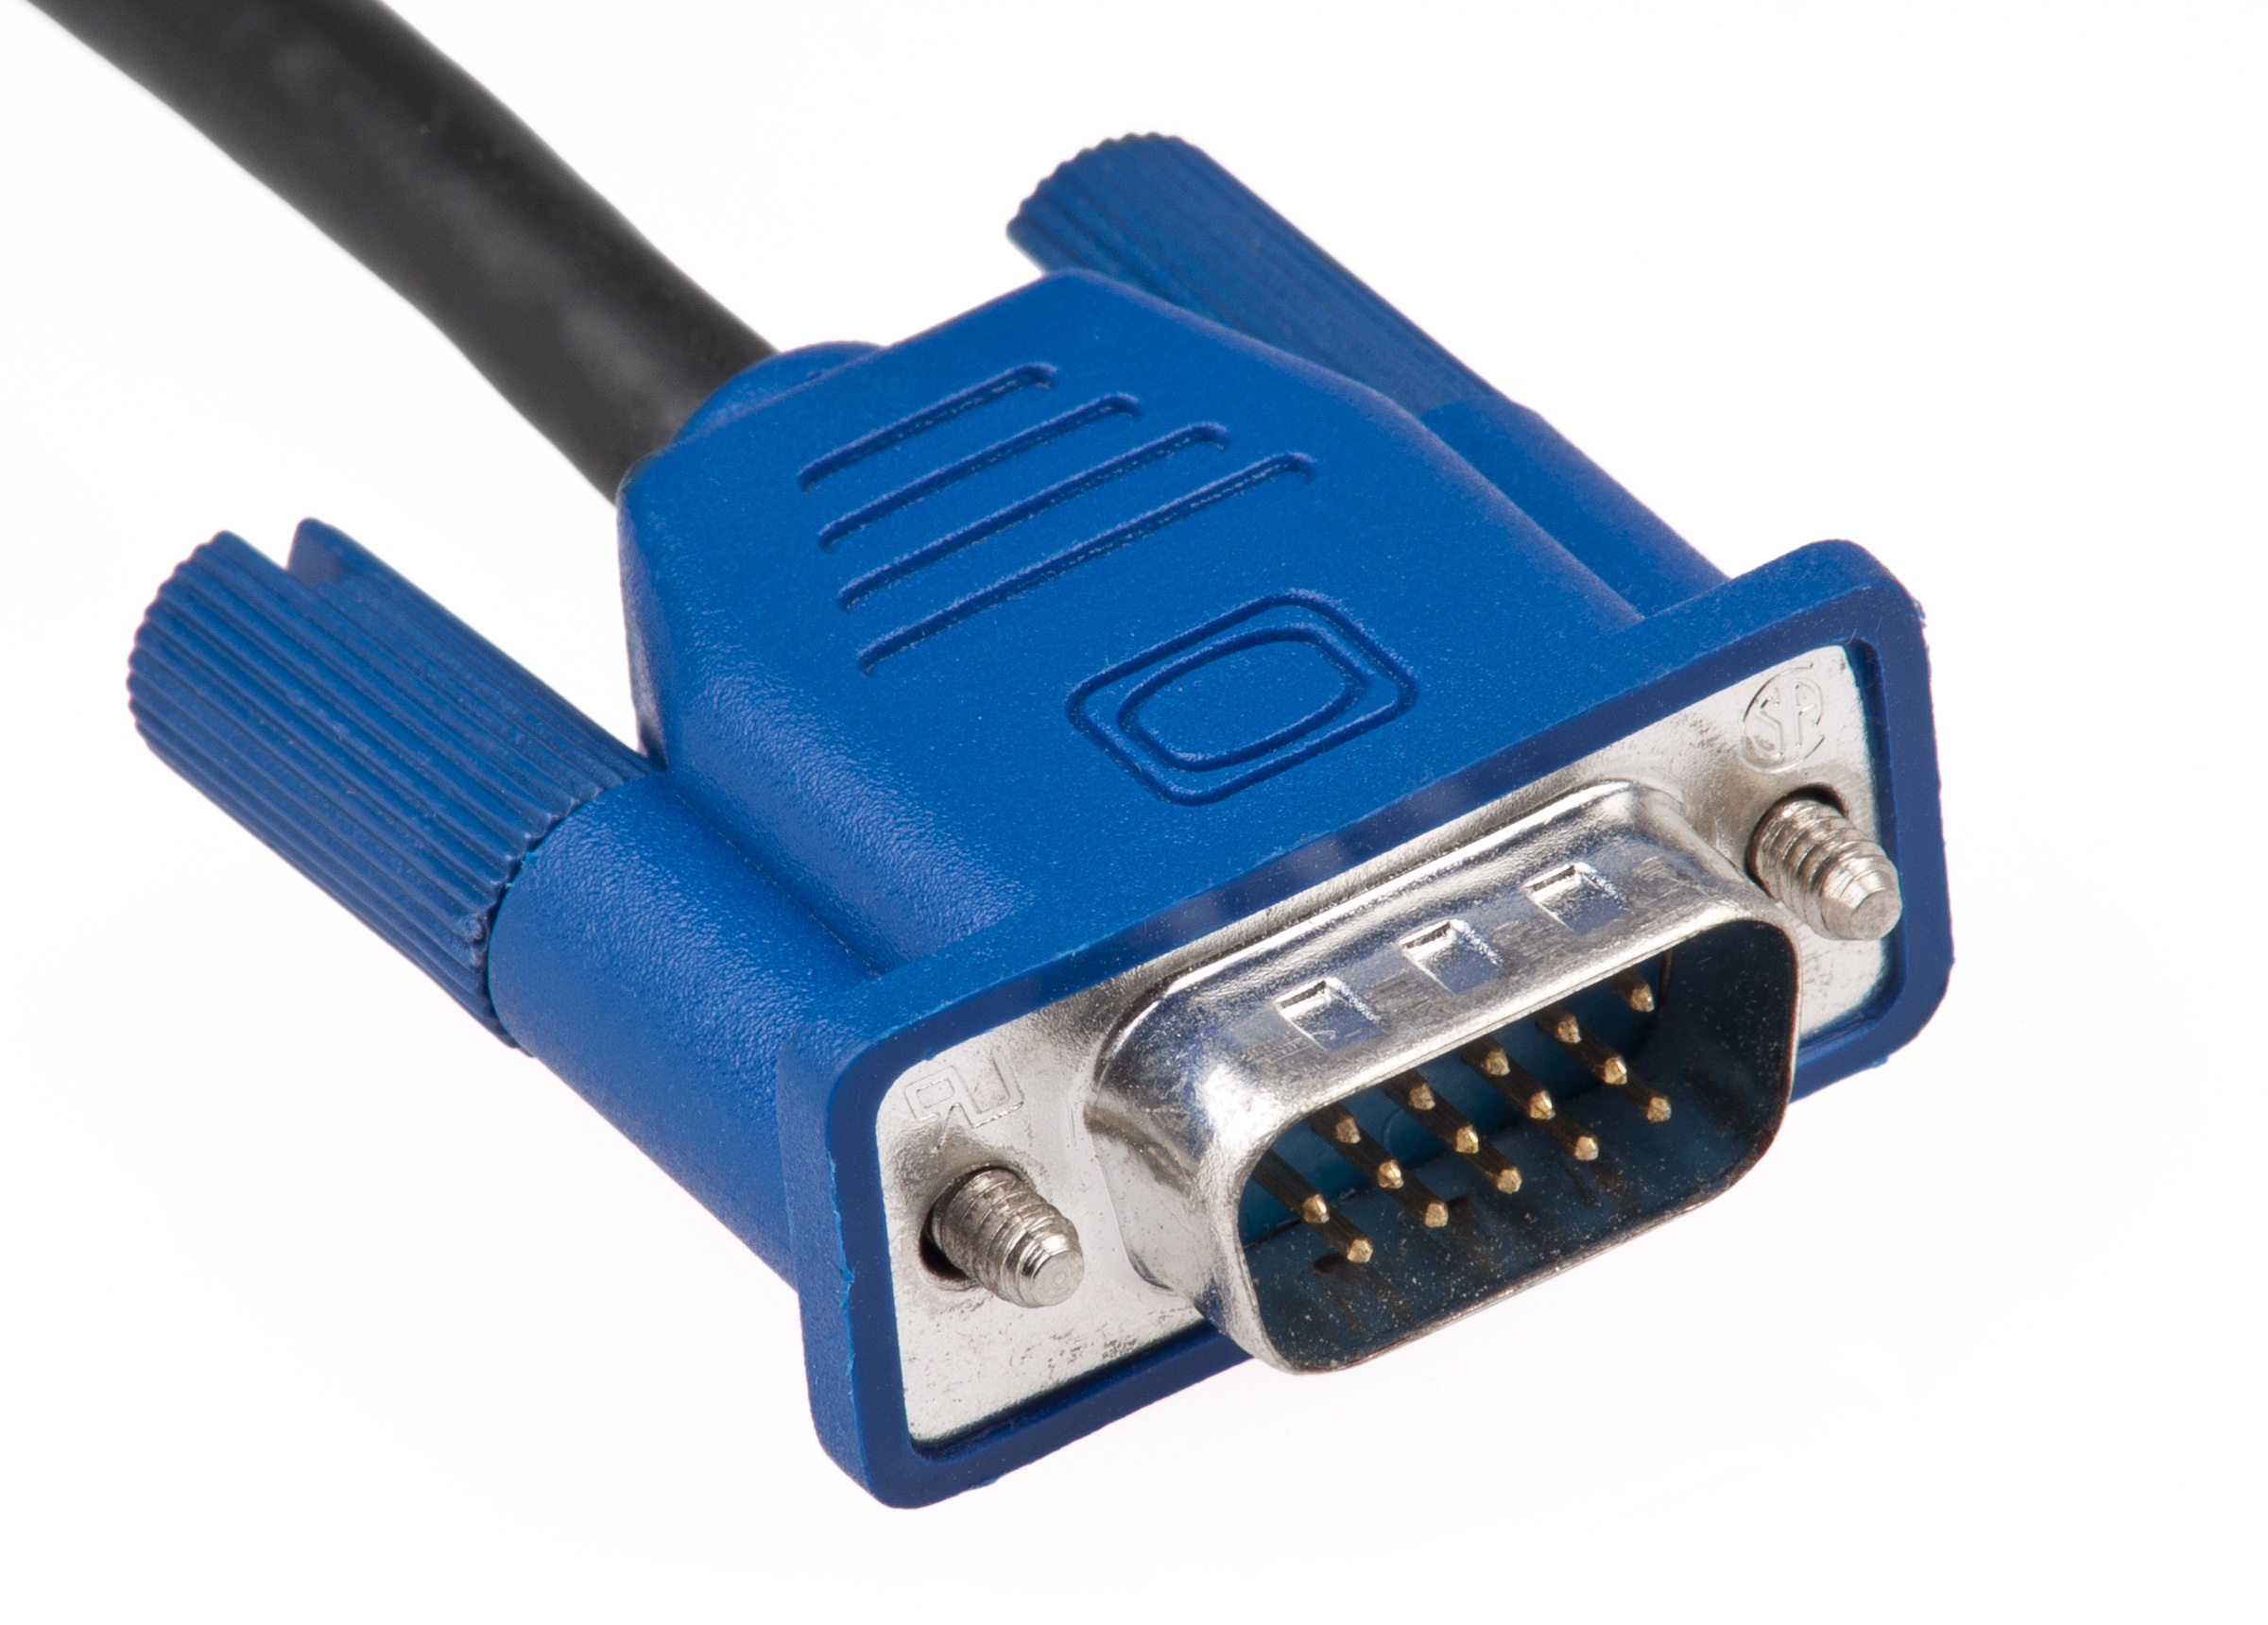 A VGA cable